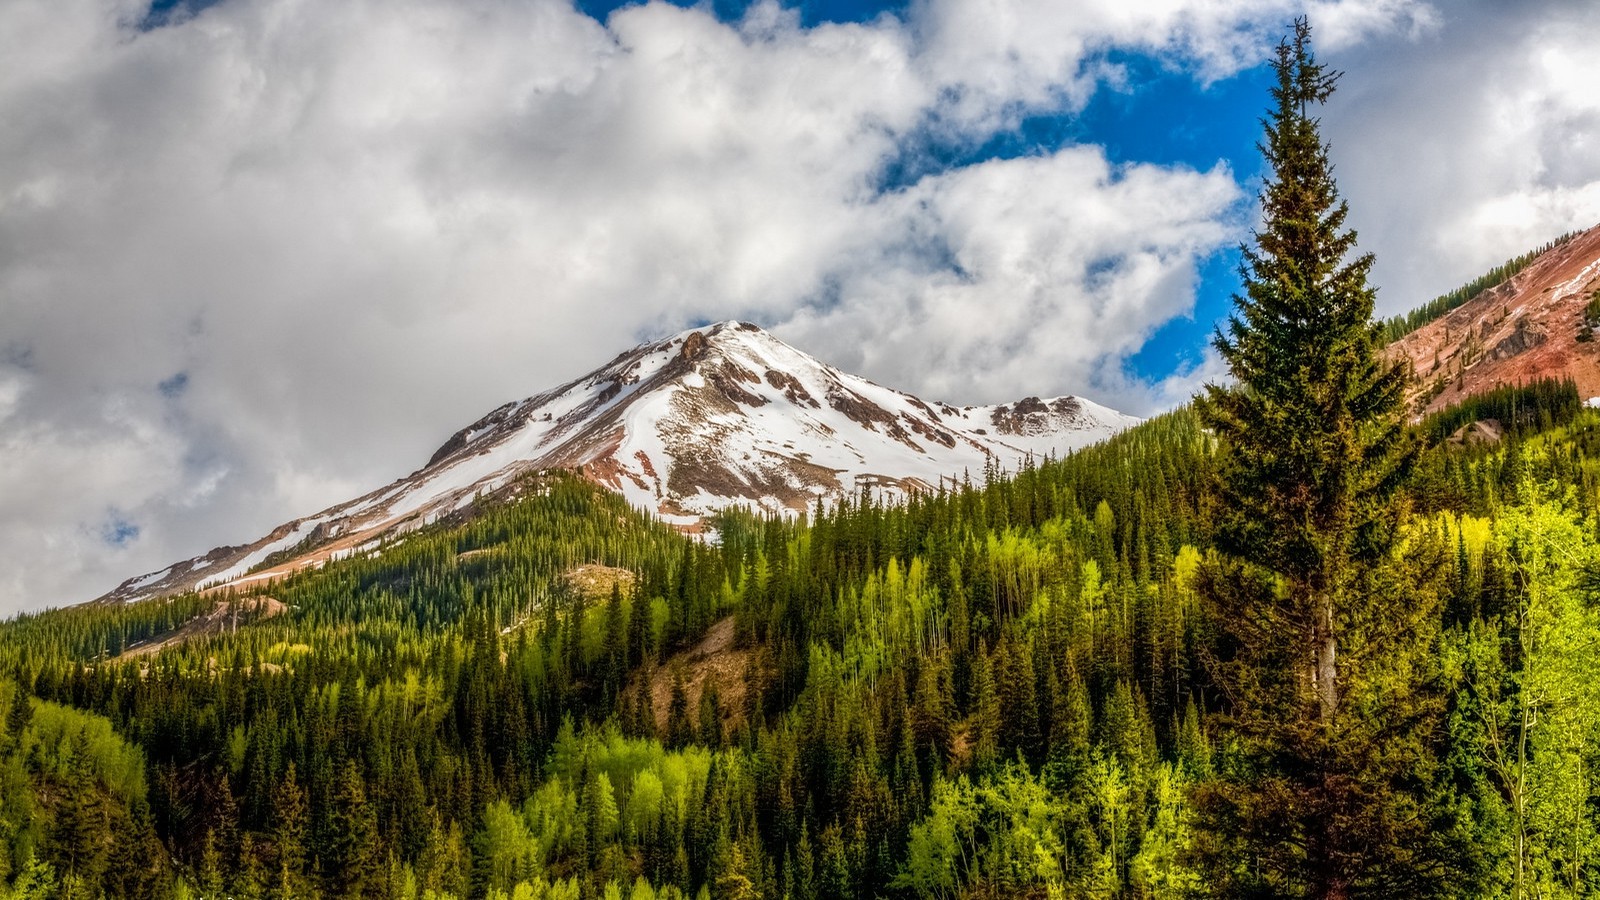 snowy Peak, Mountain, Nature, Landscape, Colorado, Forest, Clouds, Pine Trees Wallpaper